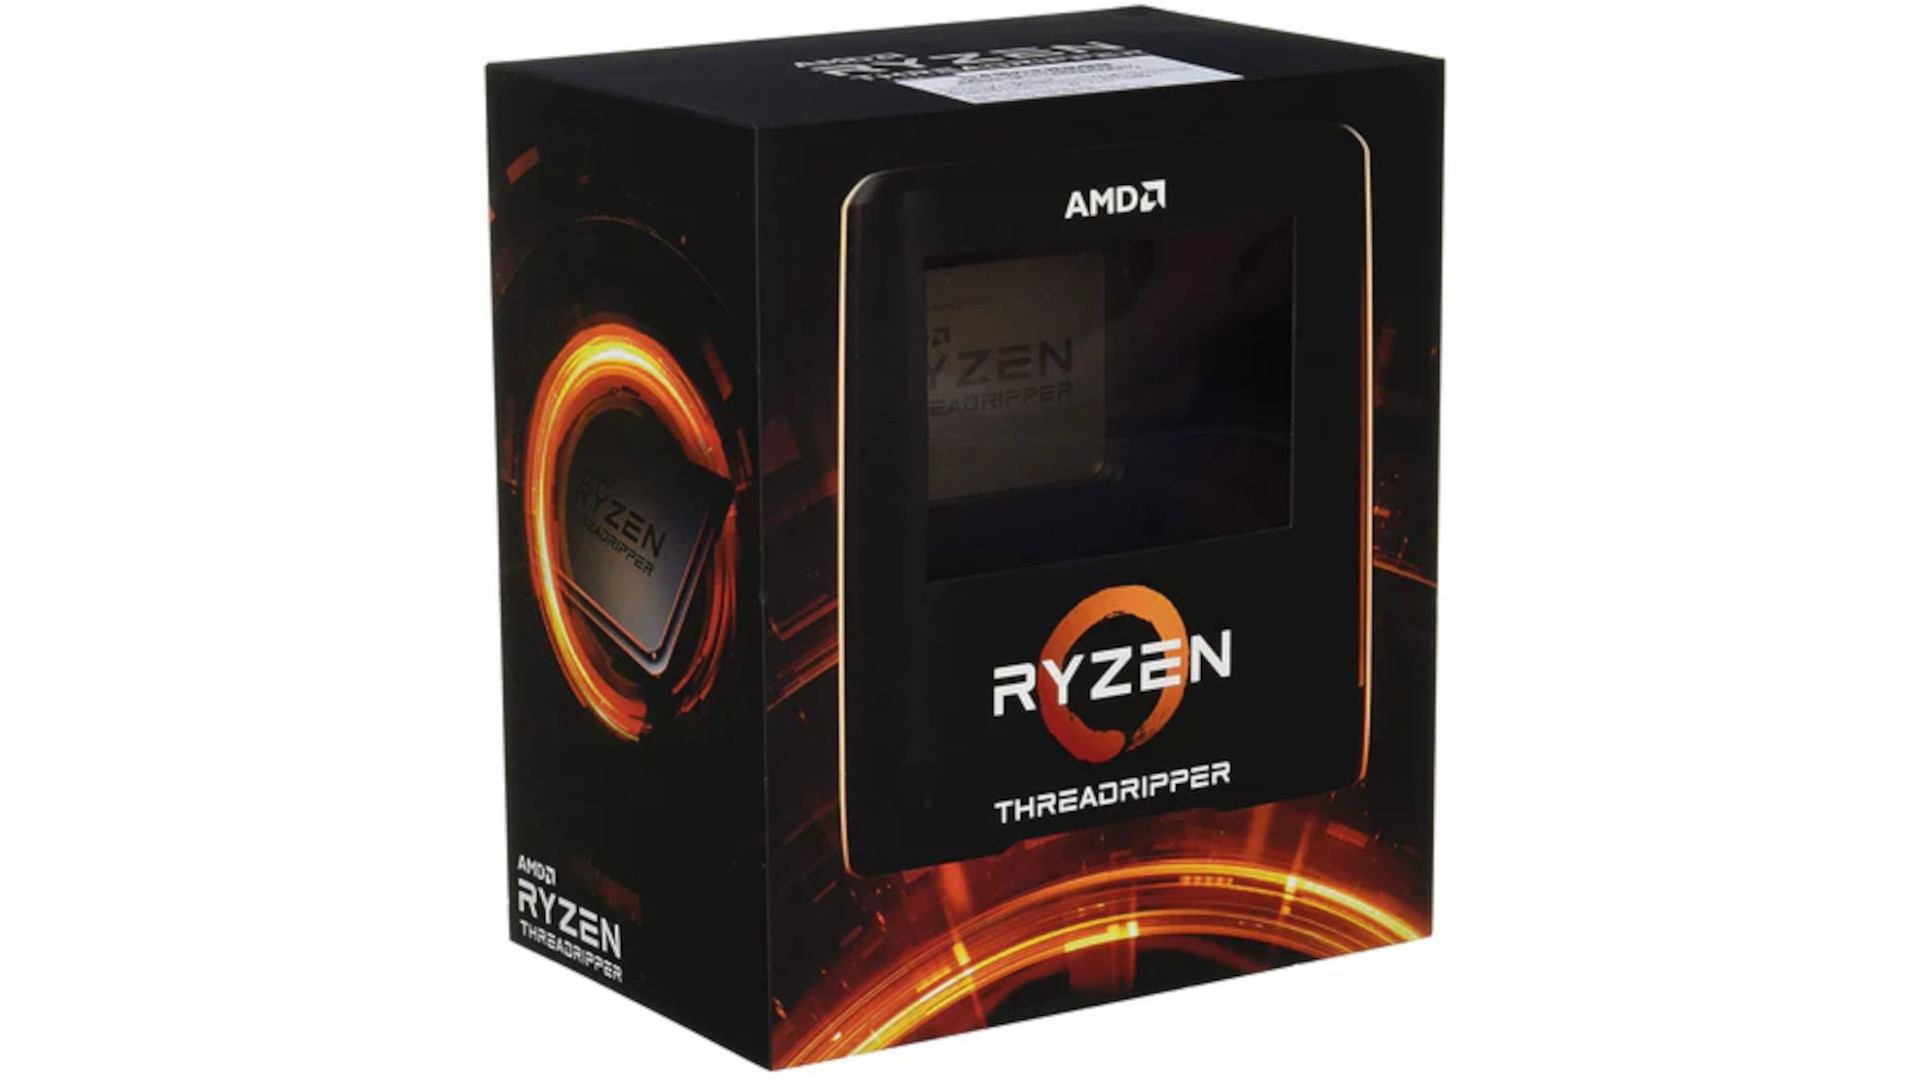 AMD Ryzen TR 3990X 5